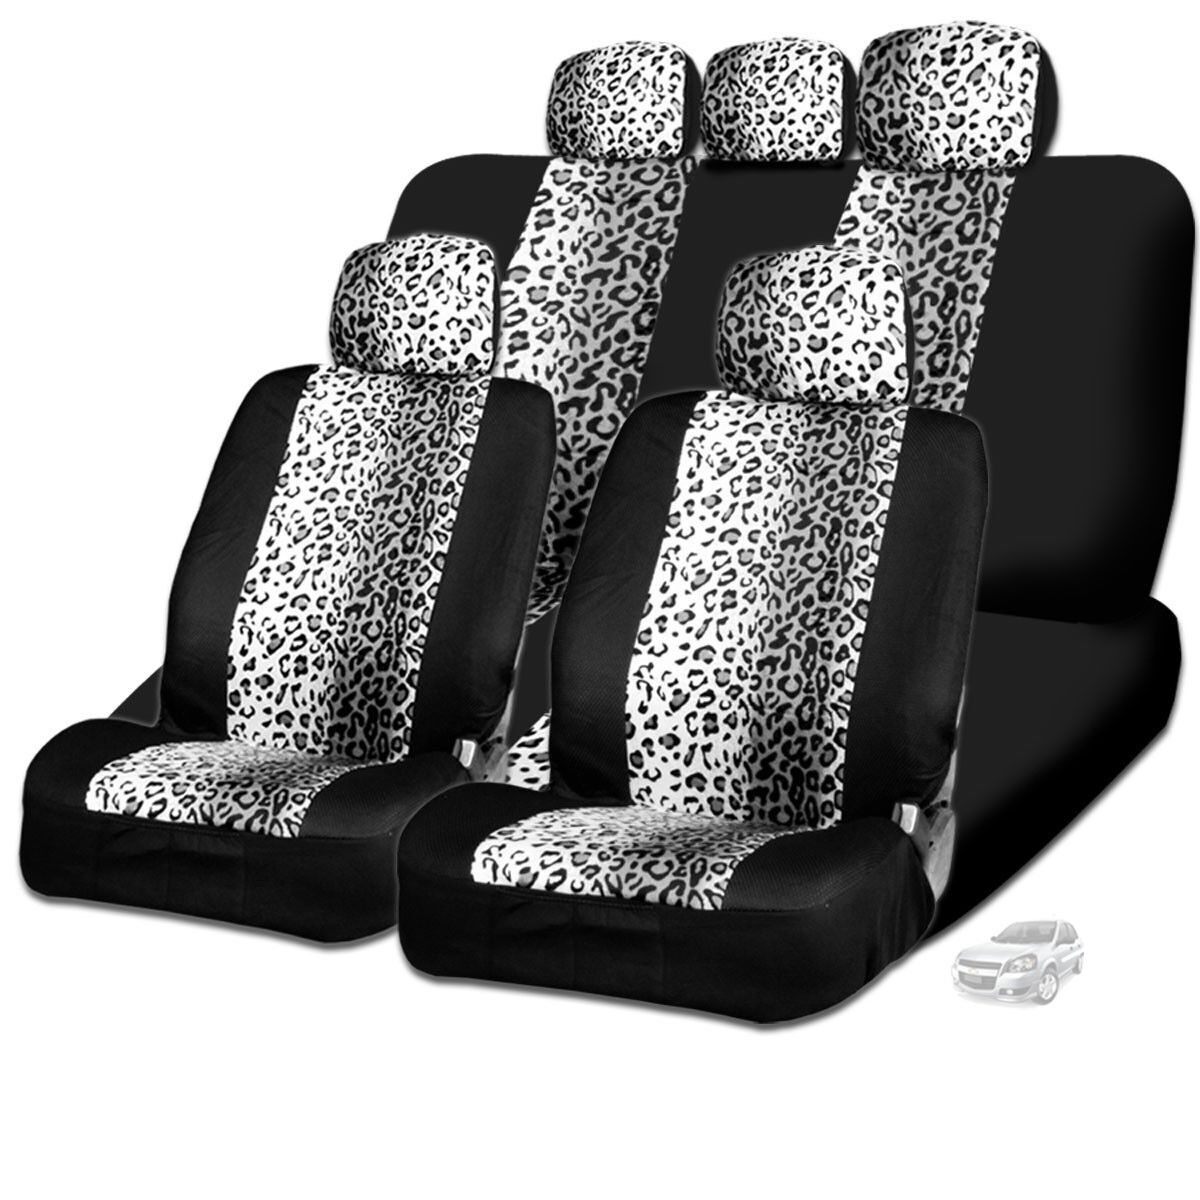 New Design Safari Snow Leopard Print Car Truck SUV Seat Covers For Chevrolet